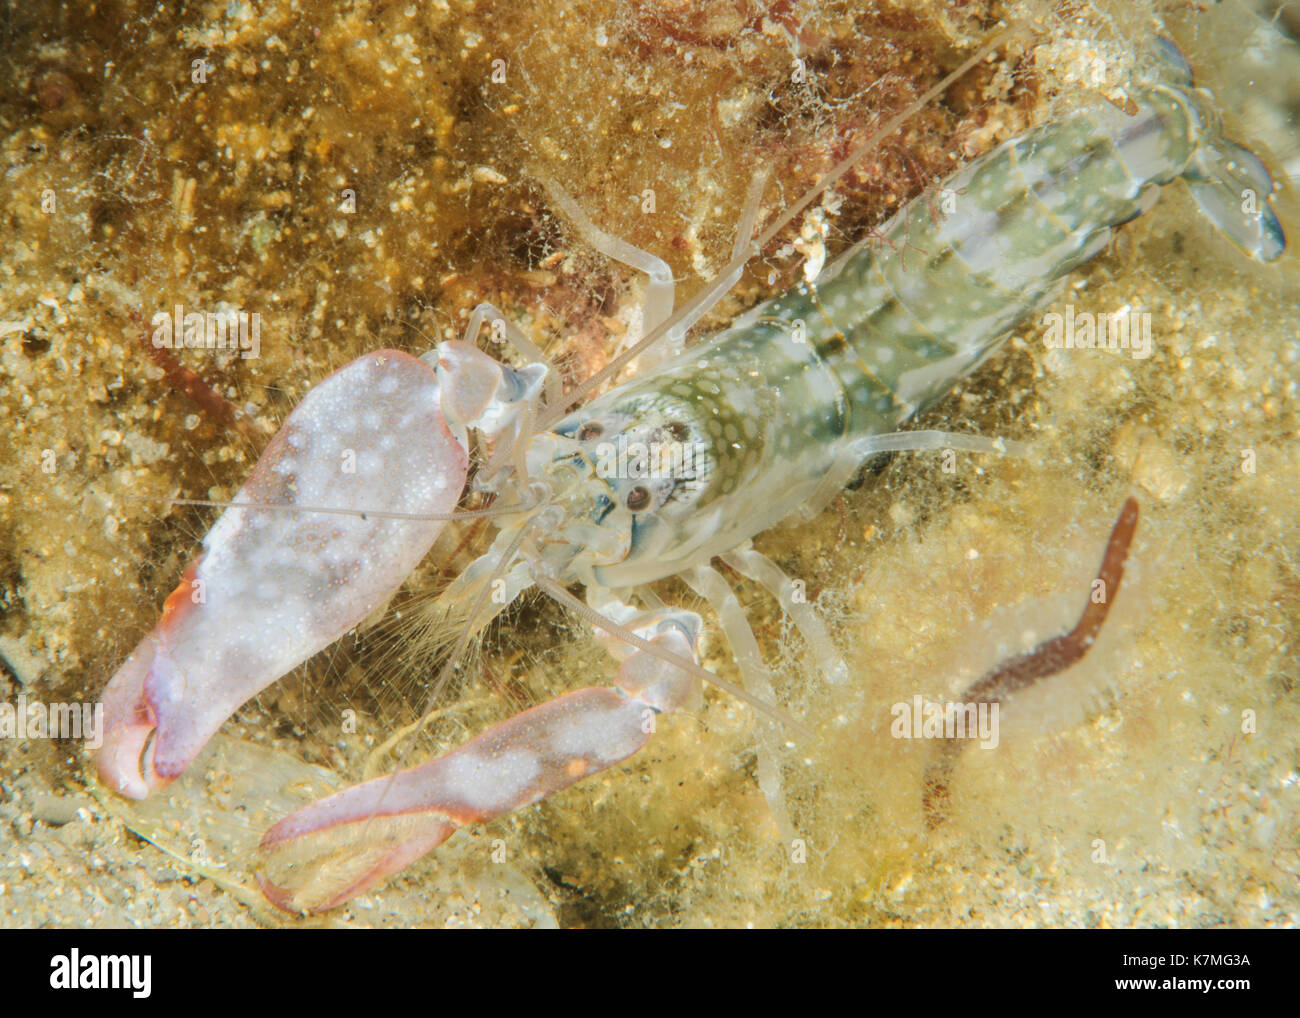 Neuseeland Snapping Shrimp Stockfoto